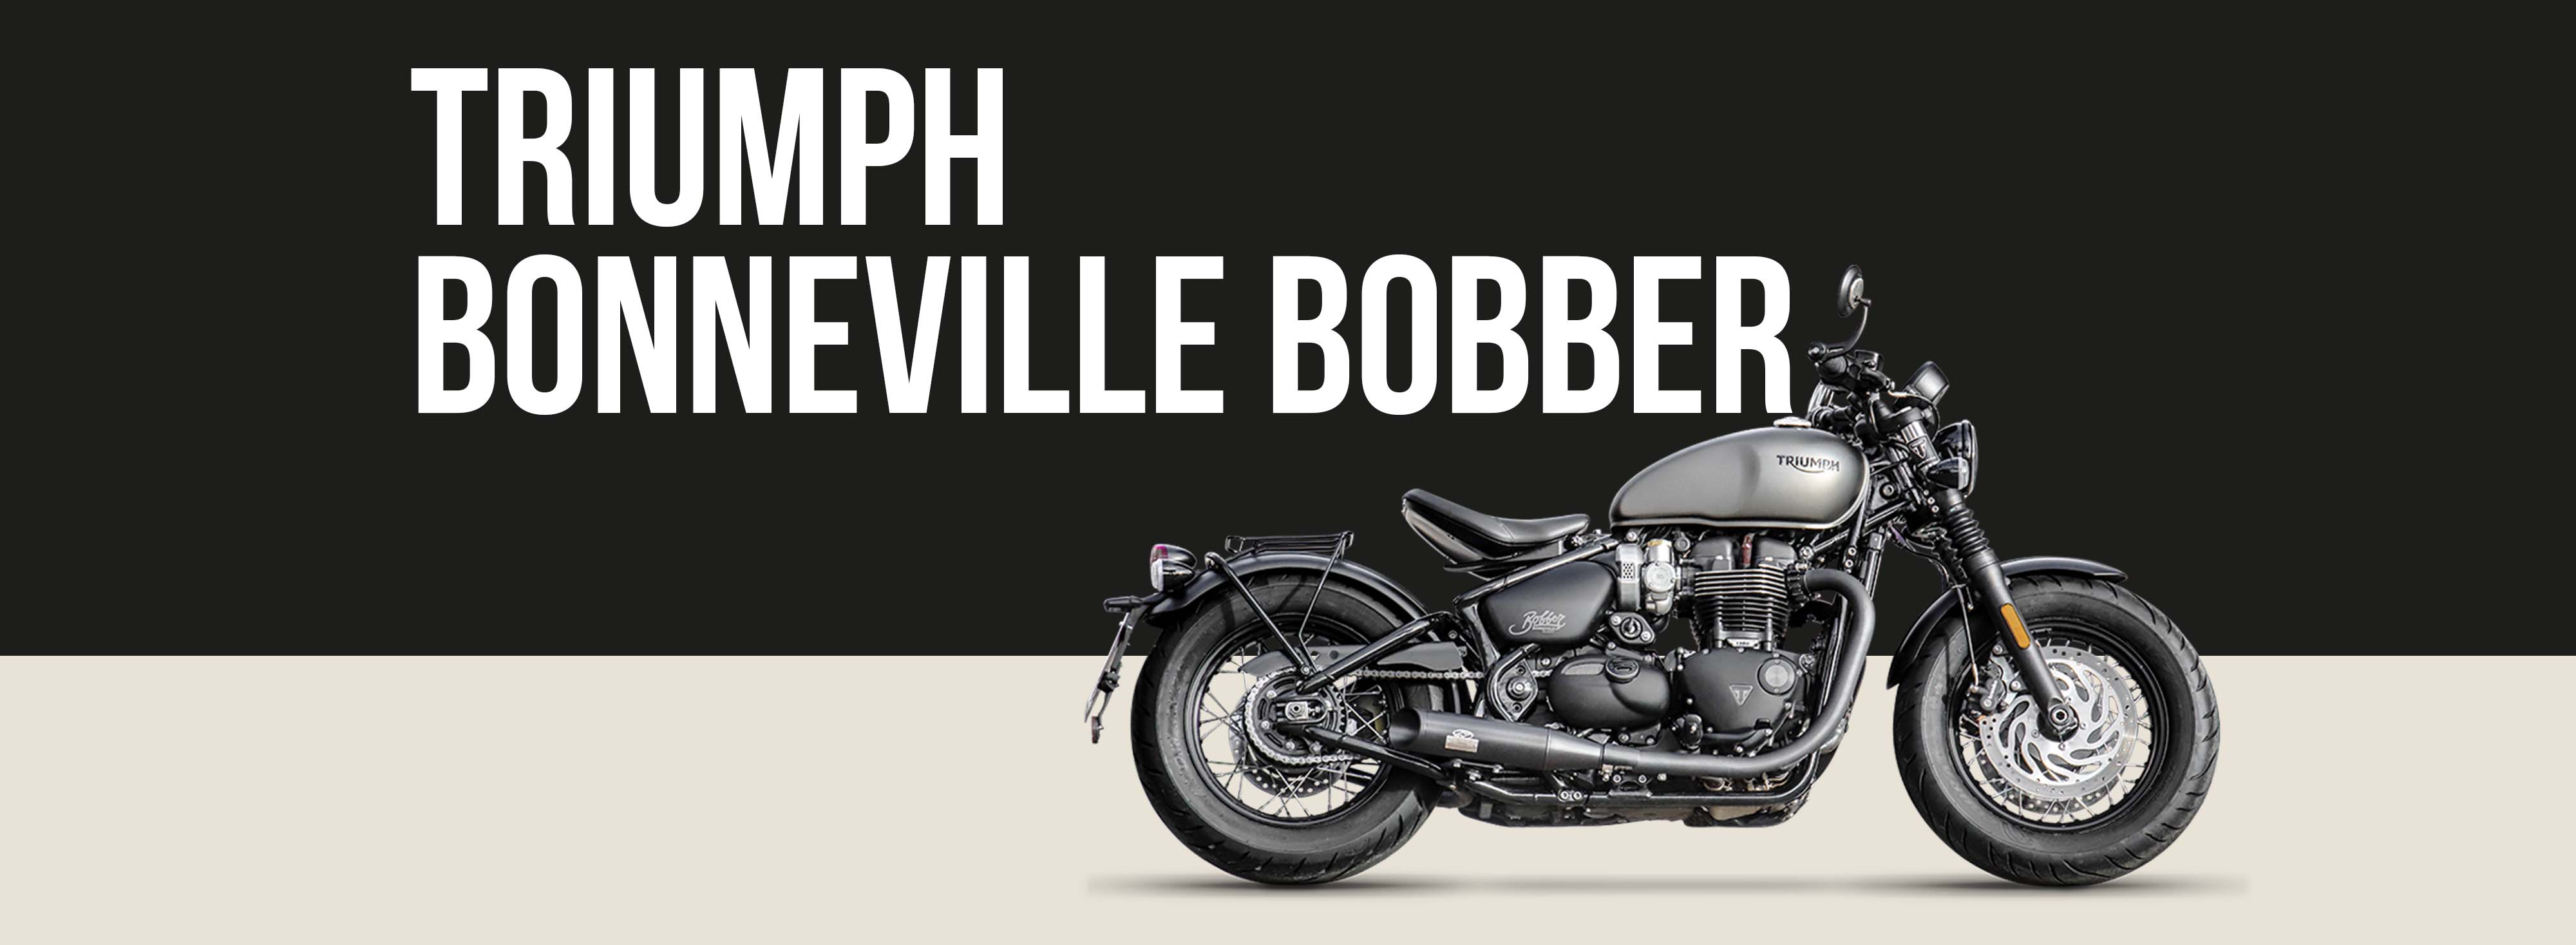 Triumph Bonnevile Bobber Motorcycle Brand Page Header